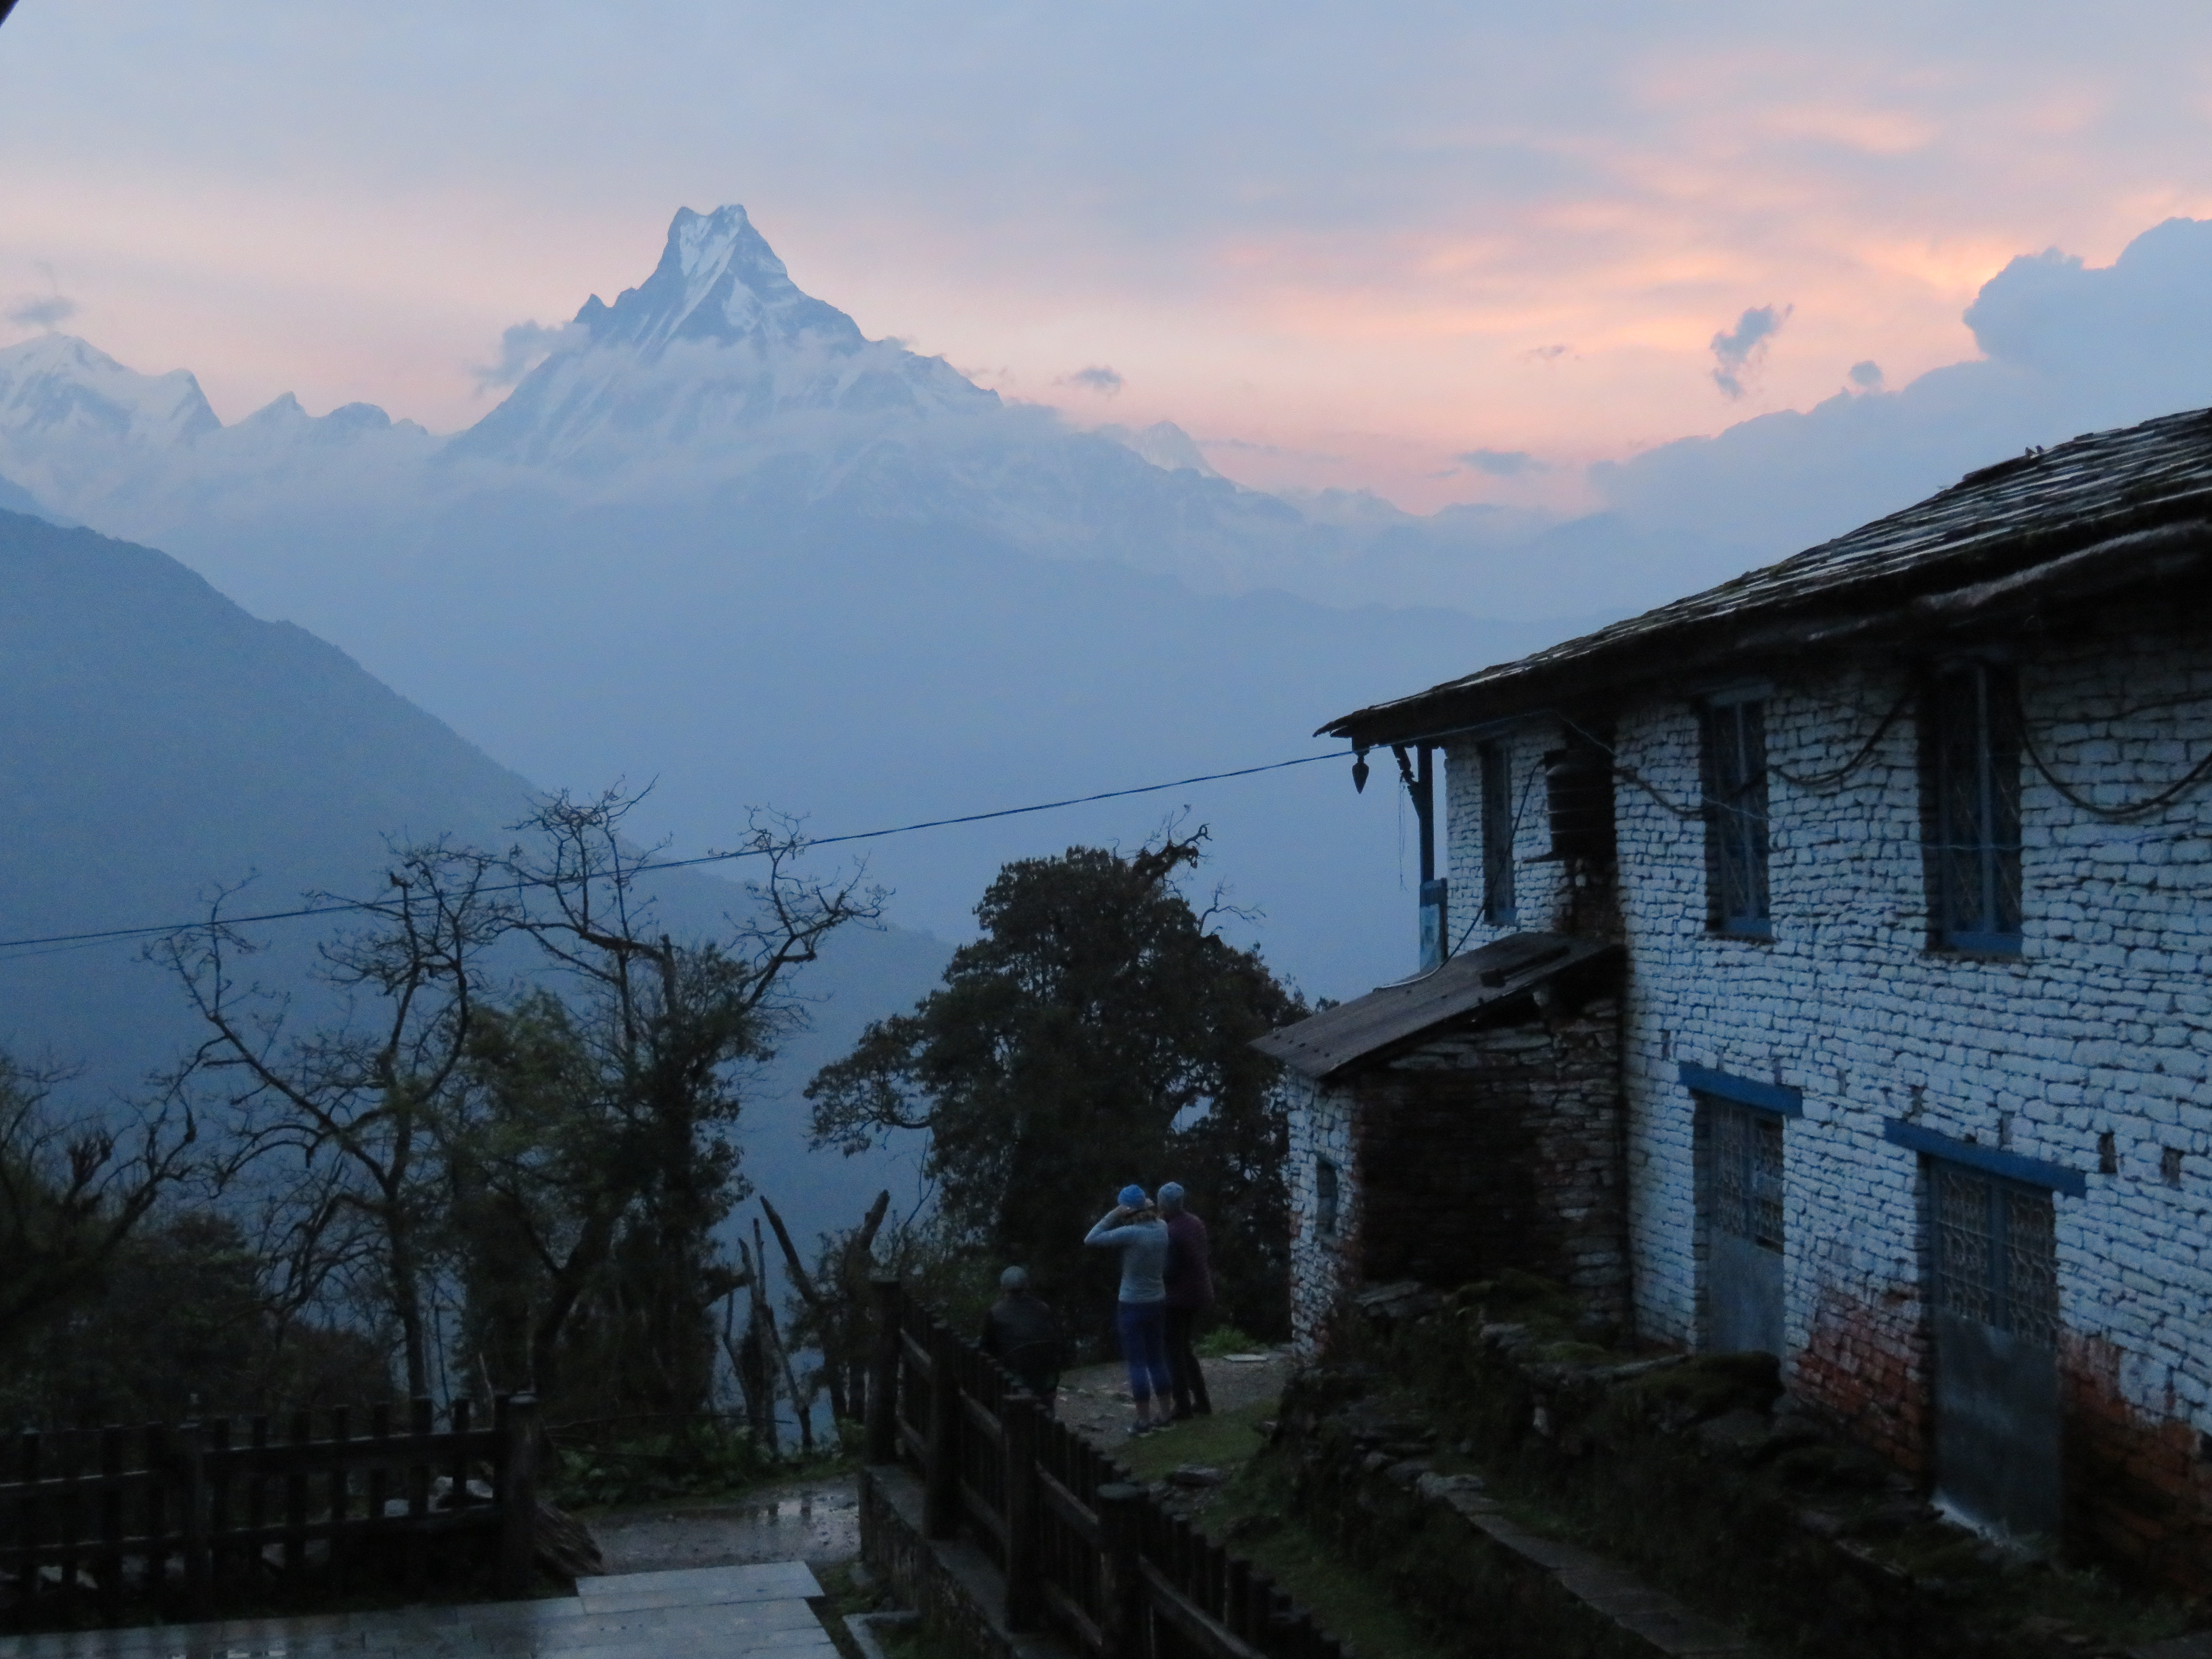 Stunning Views on the Annapurna Base Camp Trek